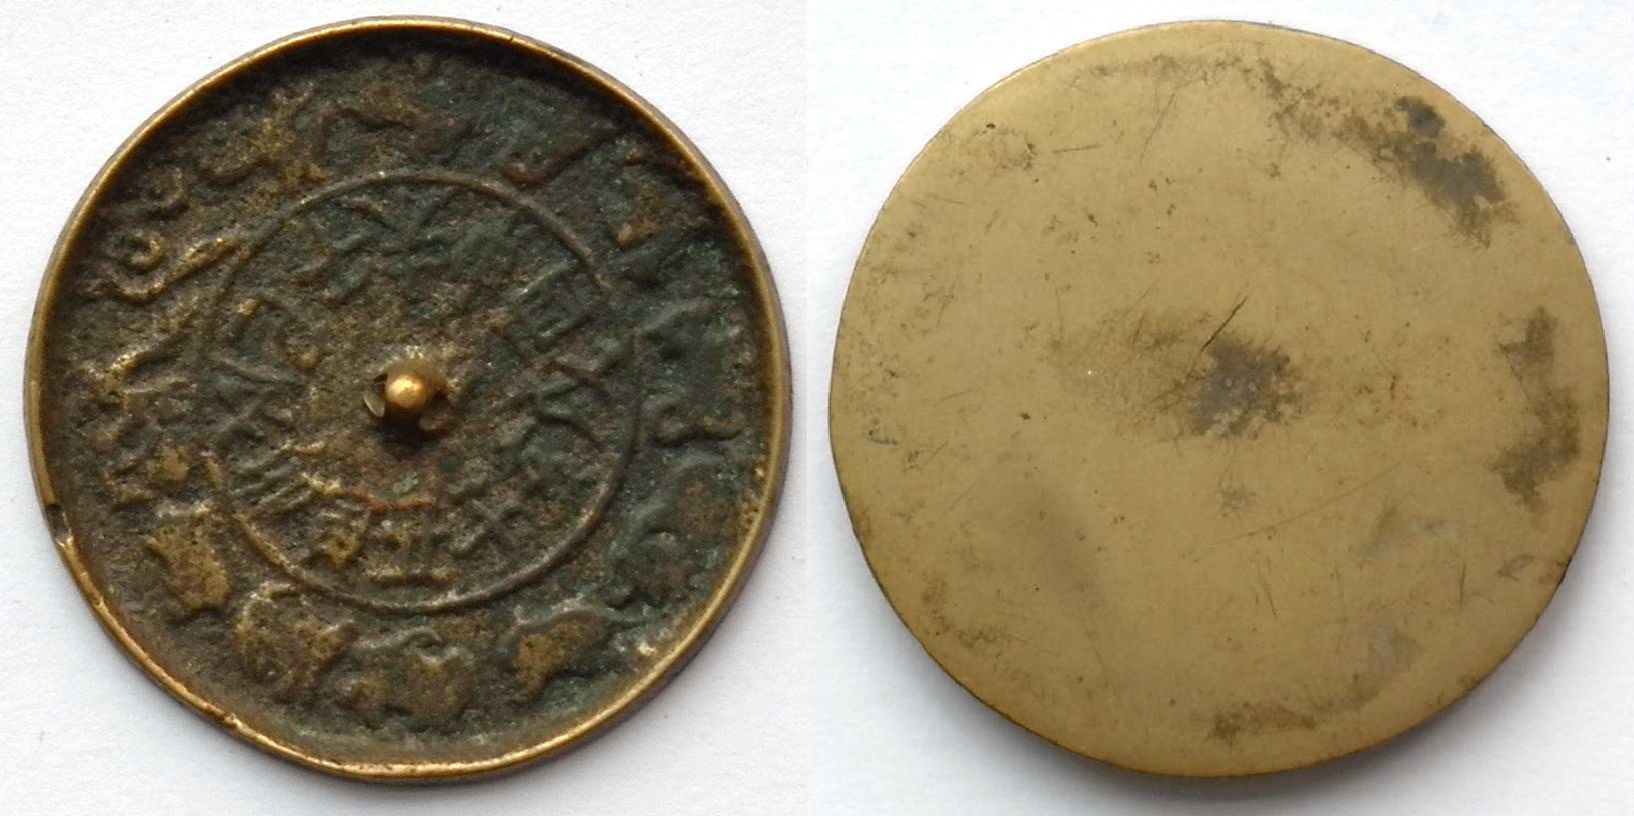 A4033, Small Brass Mirror, China Qing Dynasty AD 1800's (12 Zodiac Animals)